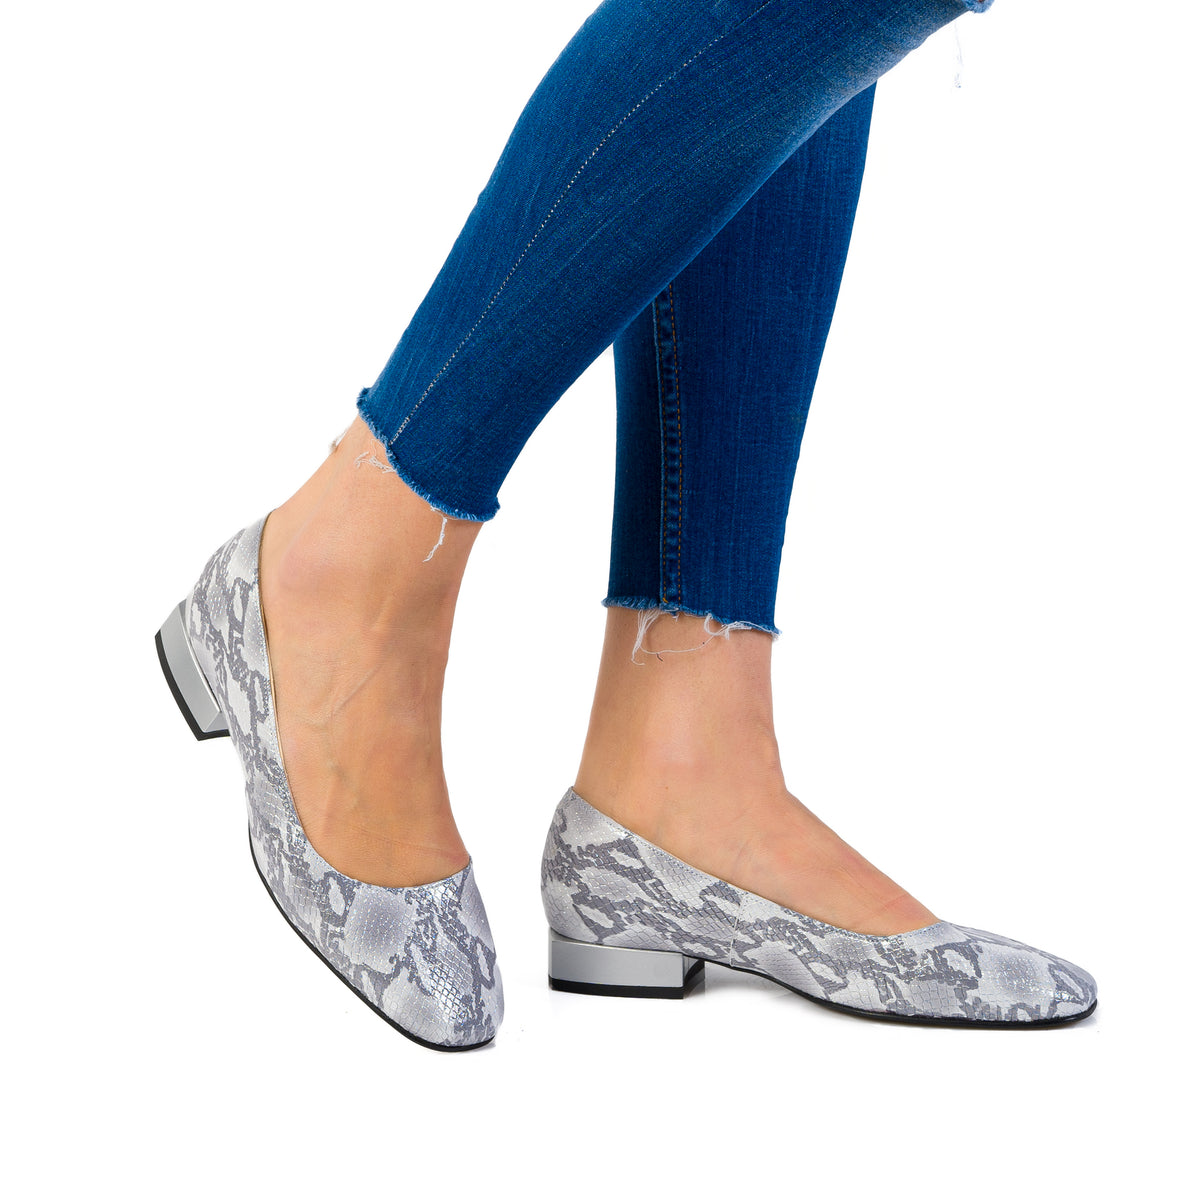 Pantofi Eleganti Dama din piele Naturala,Carin,argintii